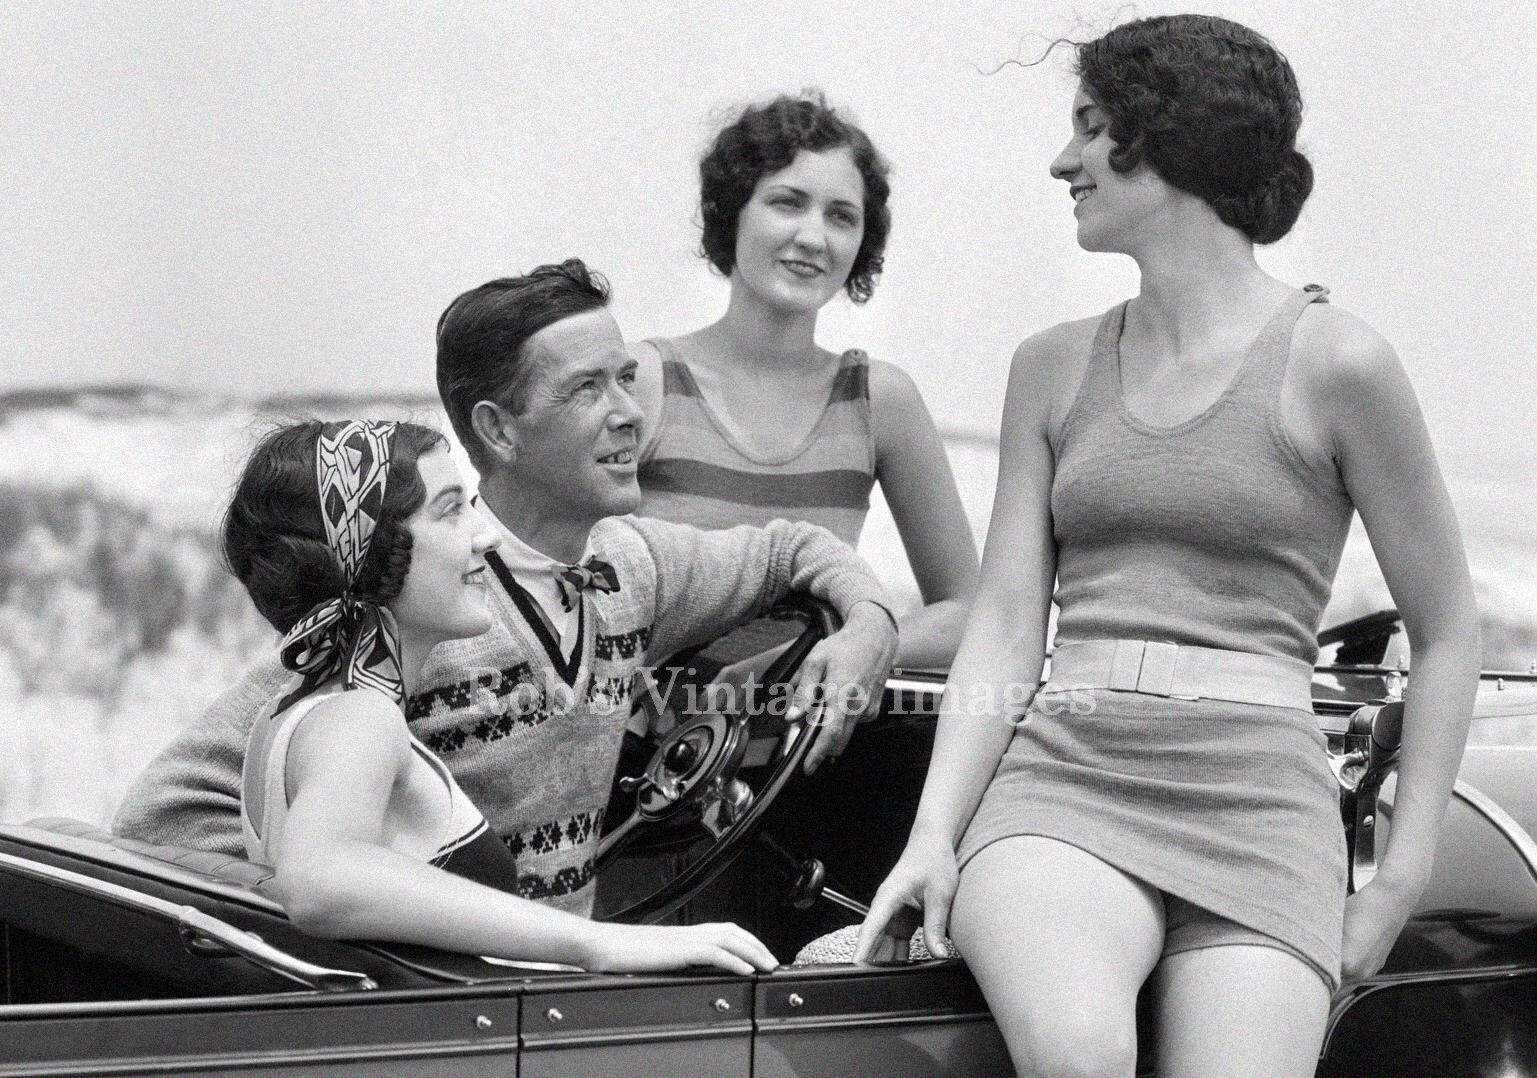  Flappers1923 swimsuit photo Stylish Fashion Classy Jazz Prohibition Roaring 20s